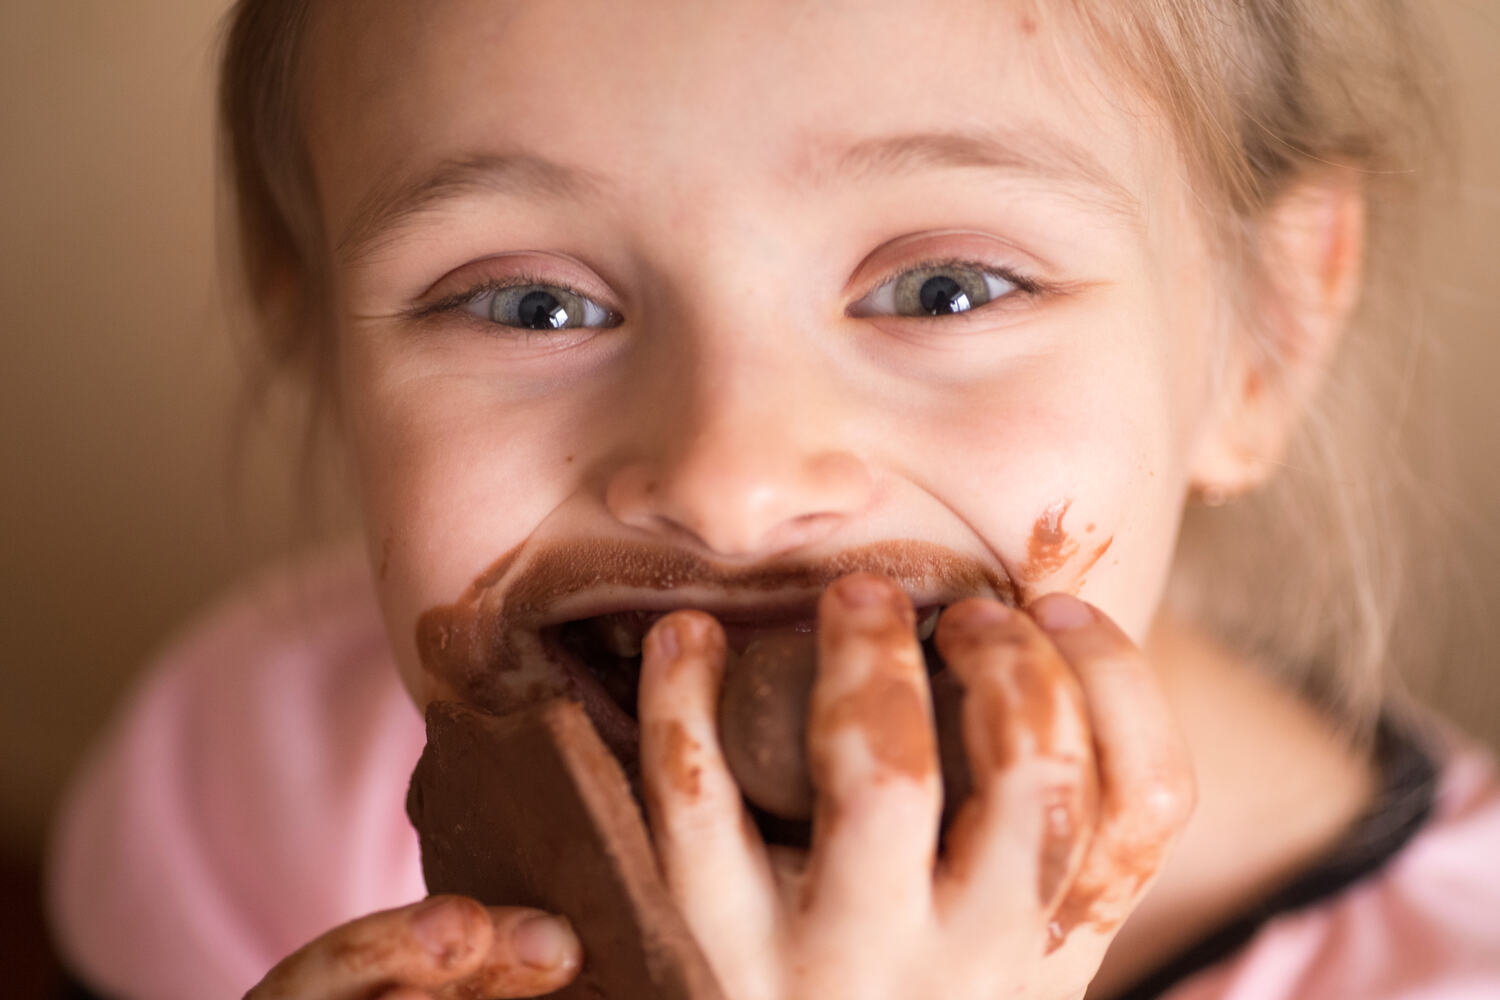 A girl eating sugary dessert